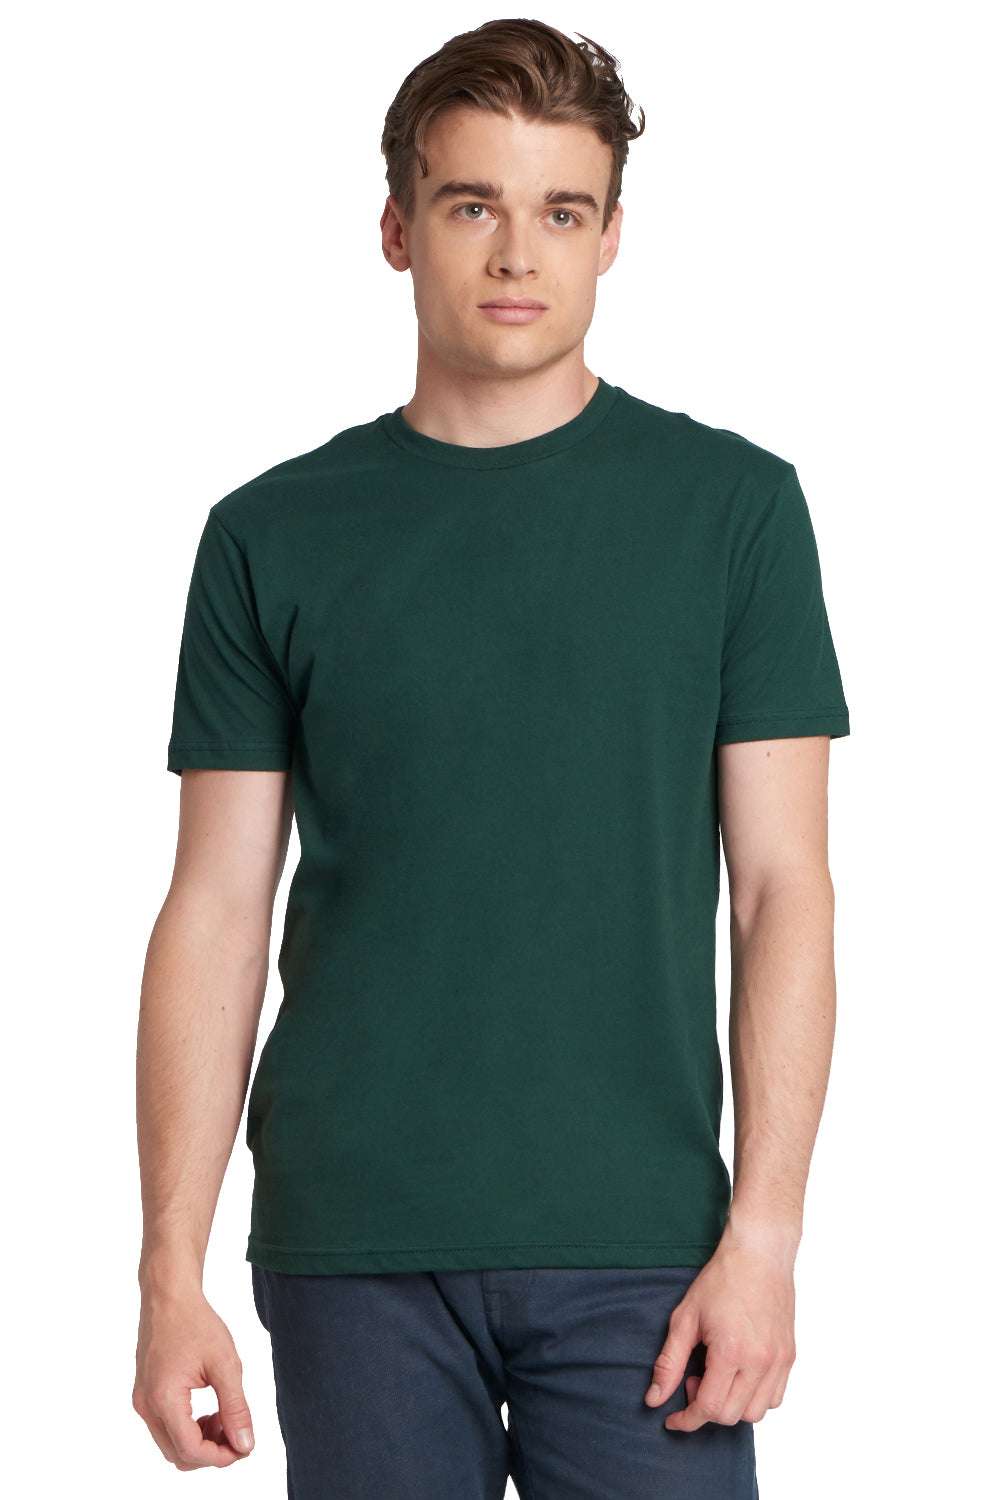 Next Level 3600 Mens Fine Jersey Short Sleeve Crewneck T-Shirt Forest Green Front